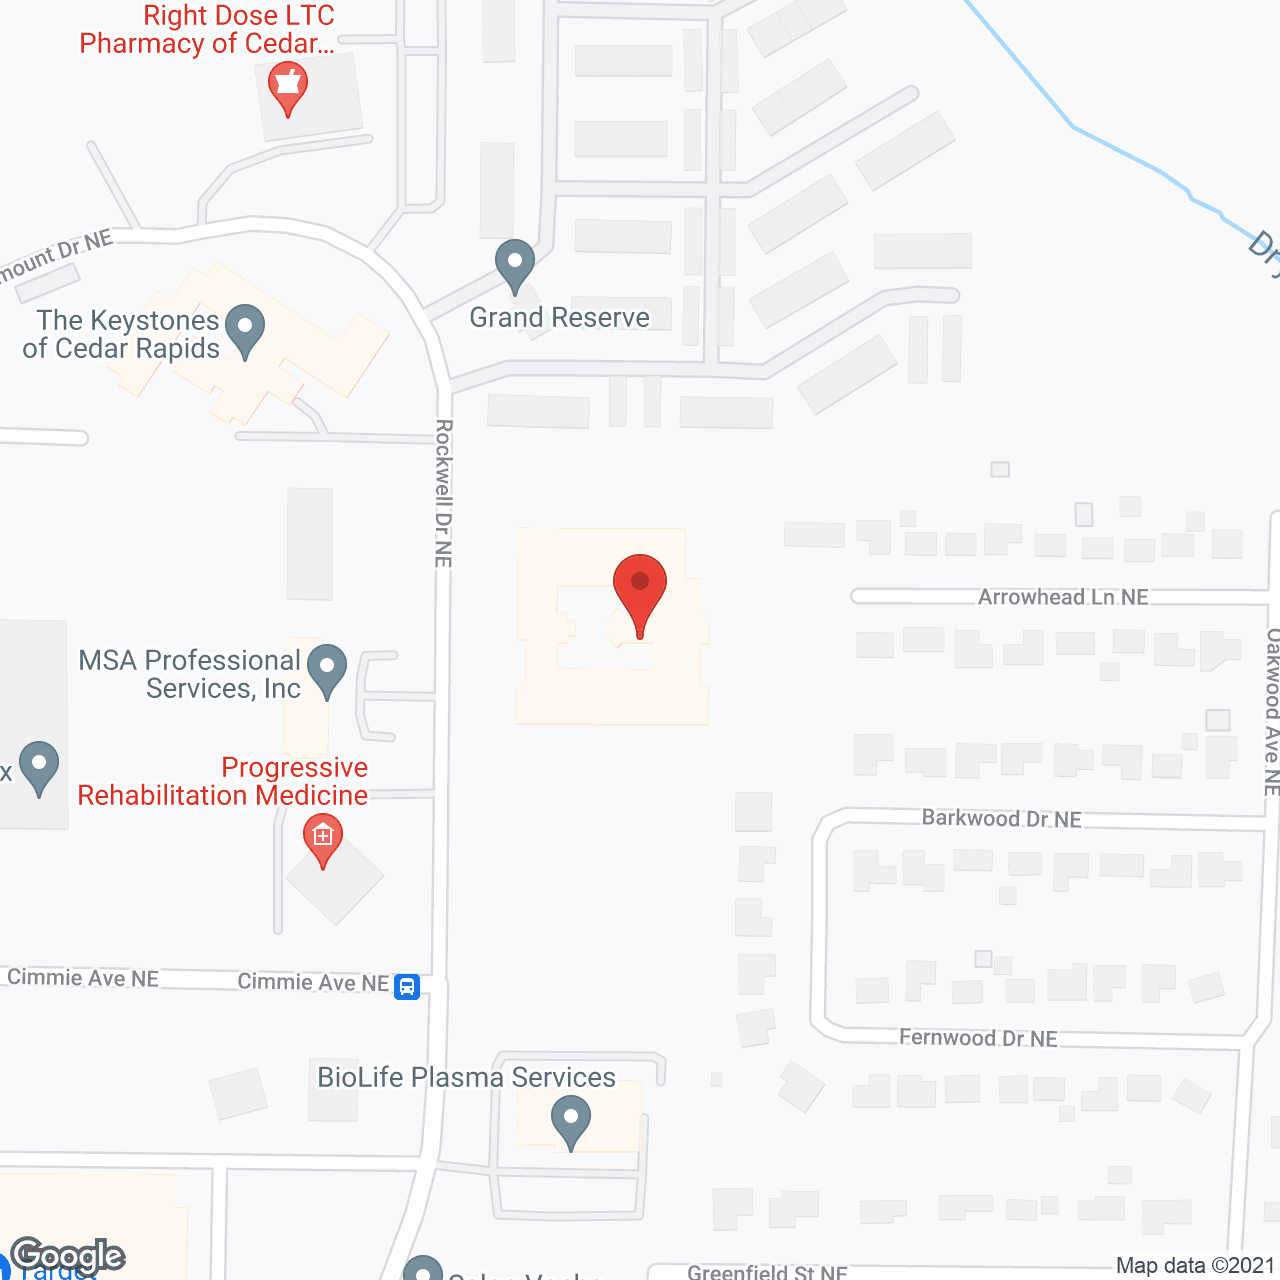 Keystone Place in google map